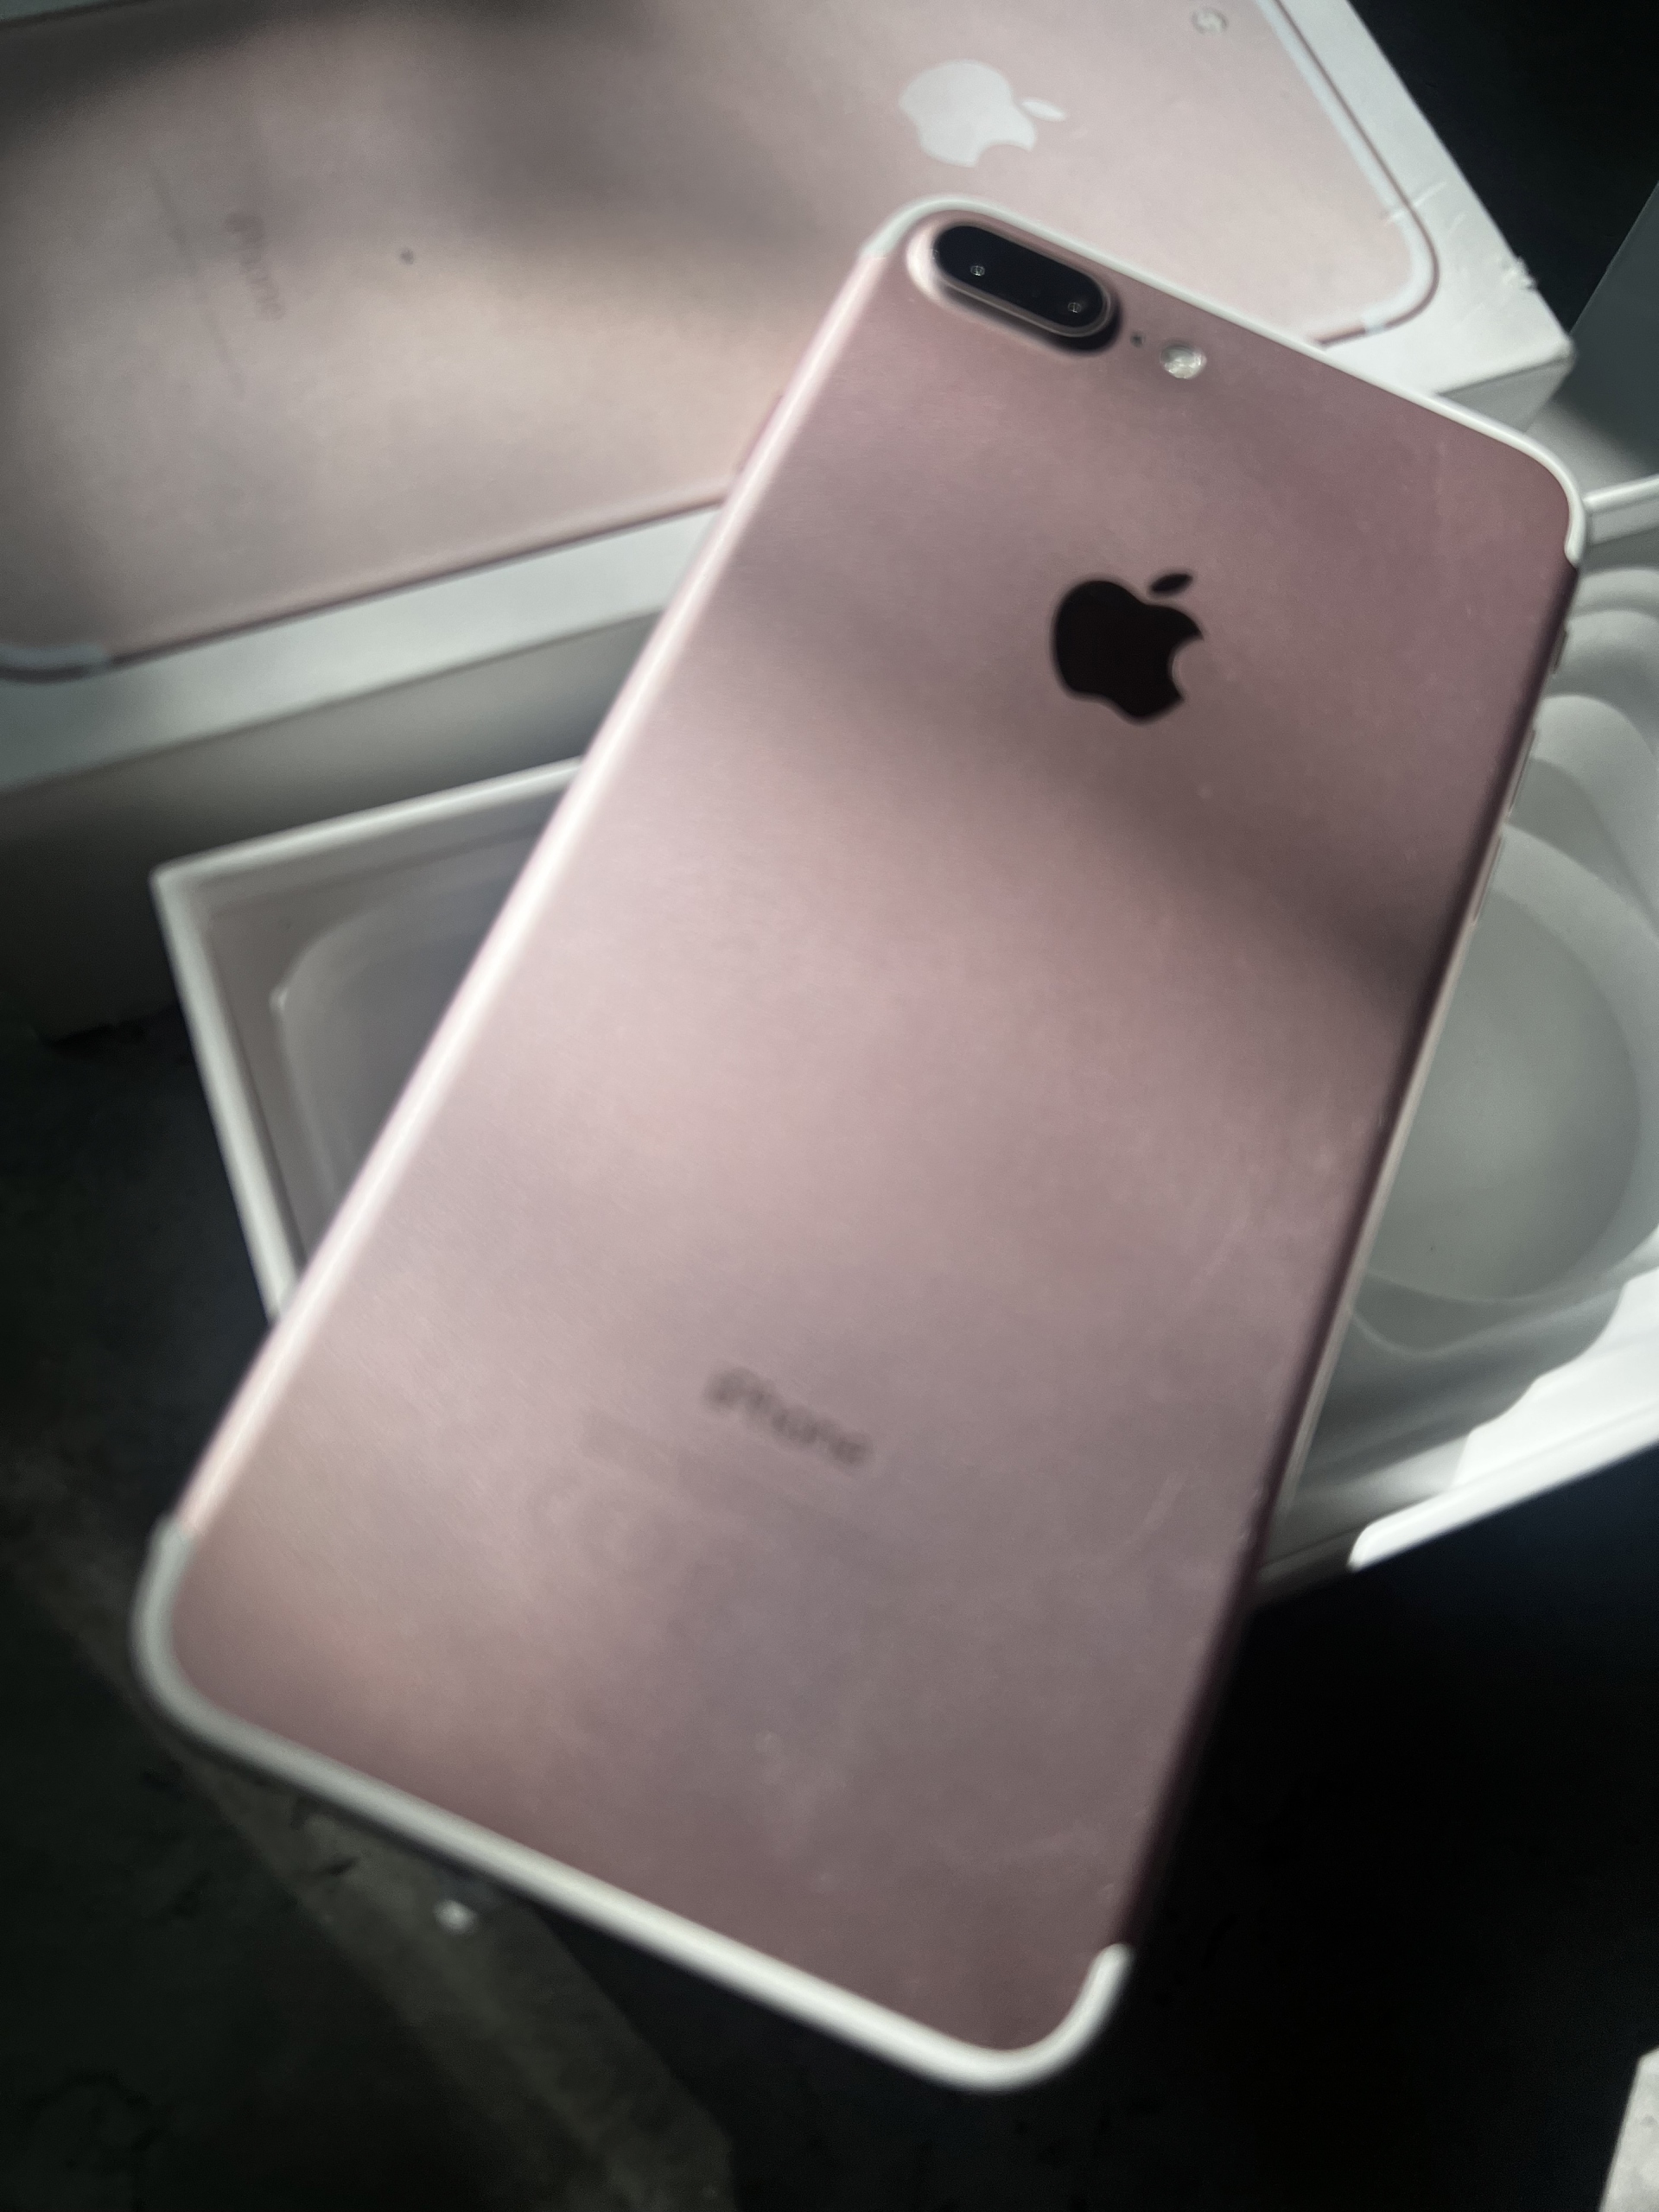 Apple Iphon 7 plus | Białytok | Kup teraz na Allegro Lokalnie